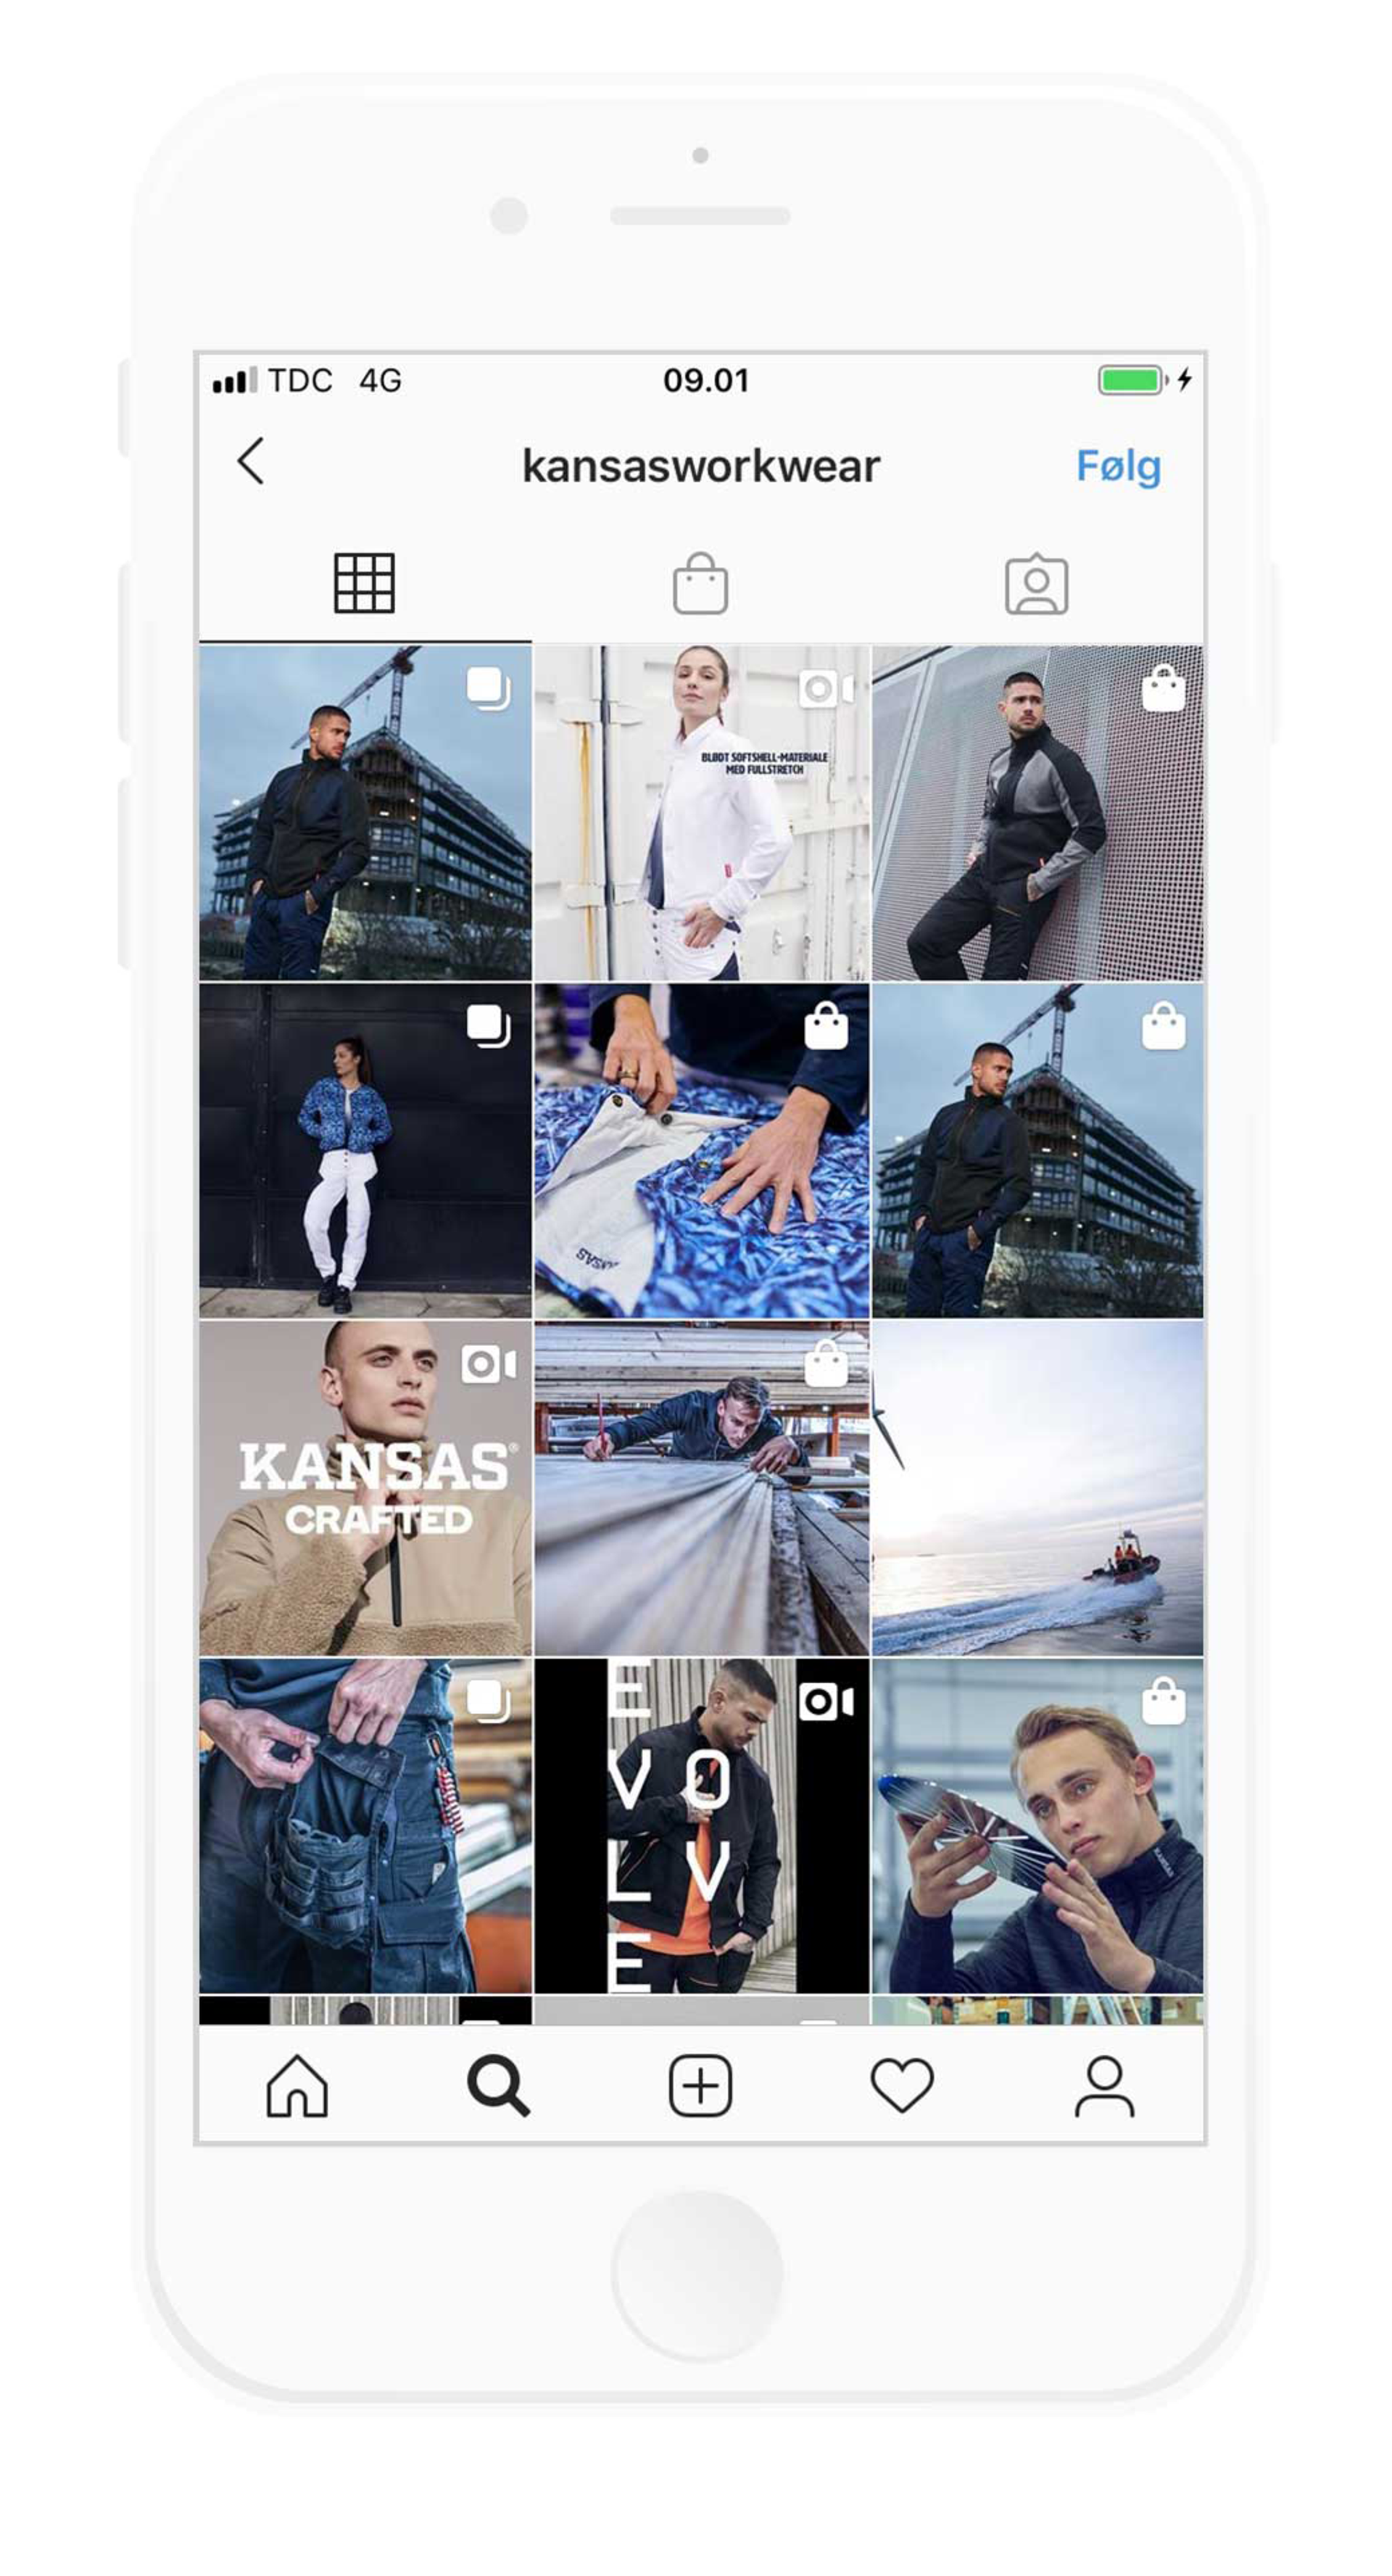 Kansas Workwear on social media